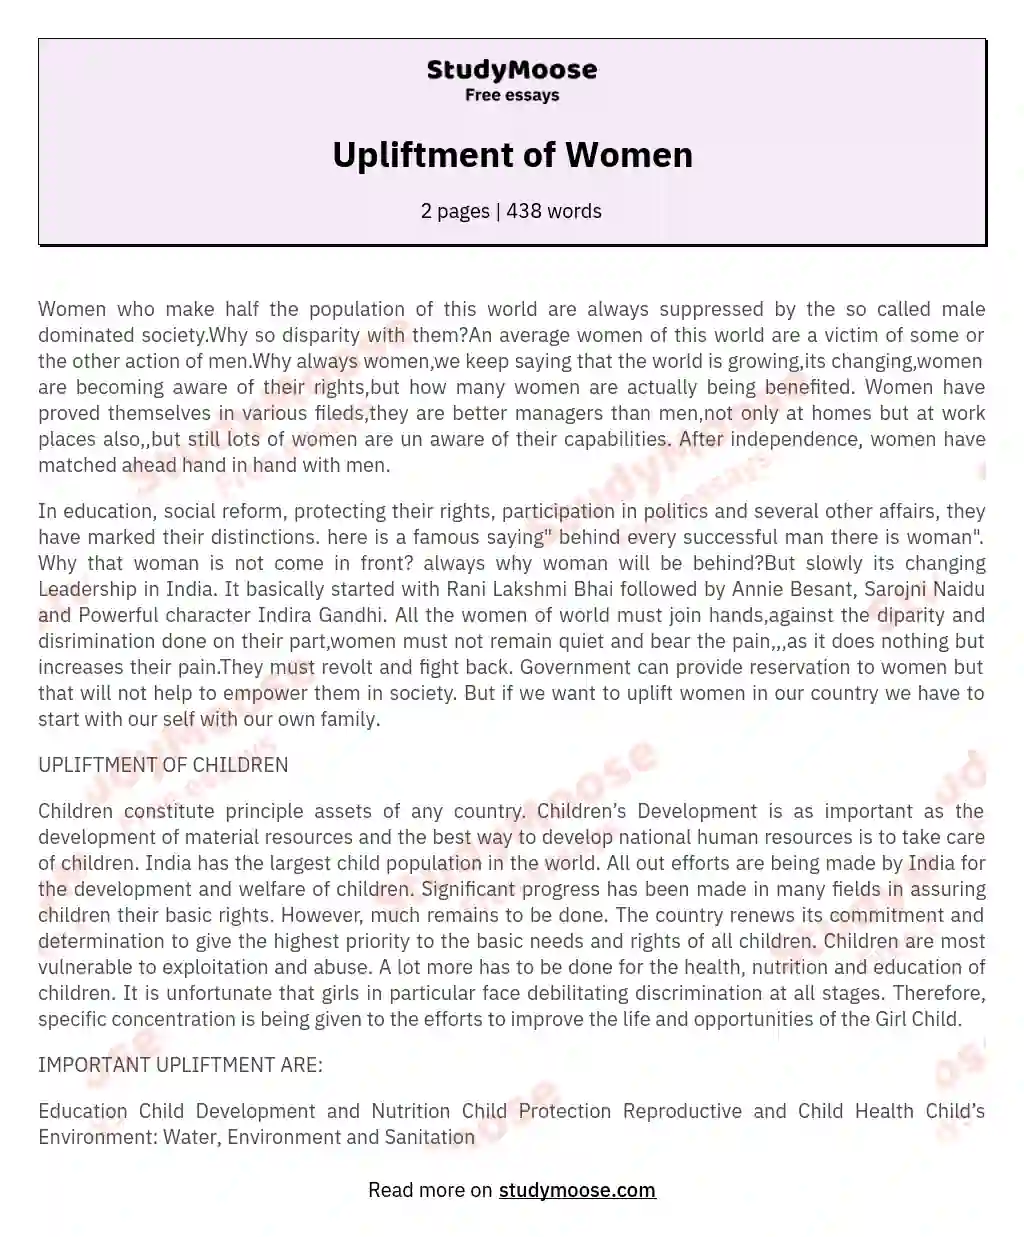 Upliftment of Women essay